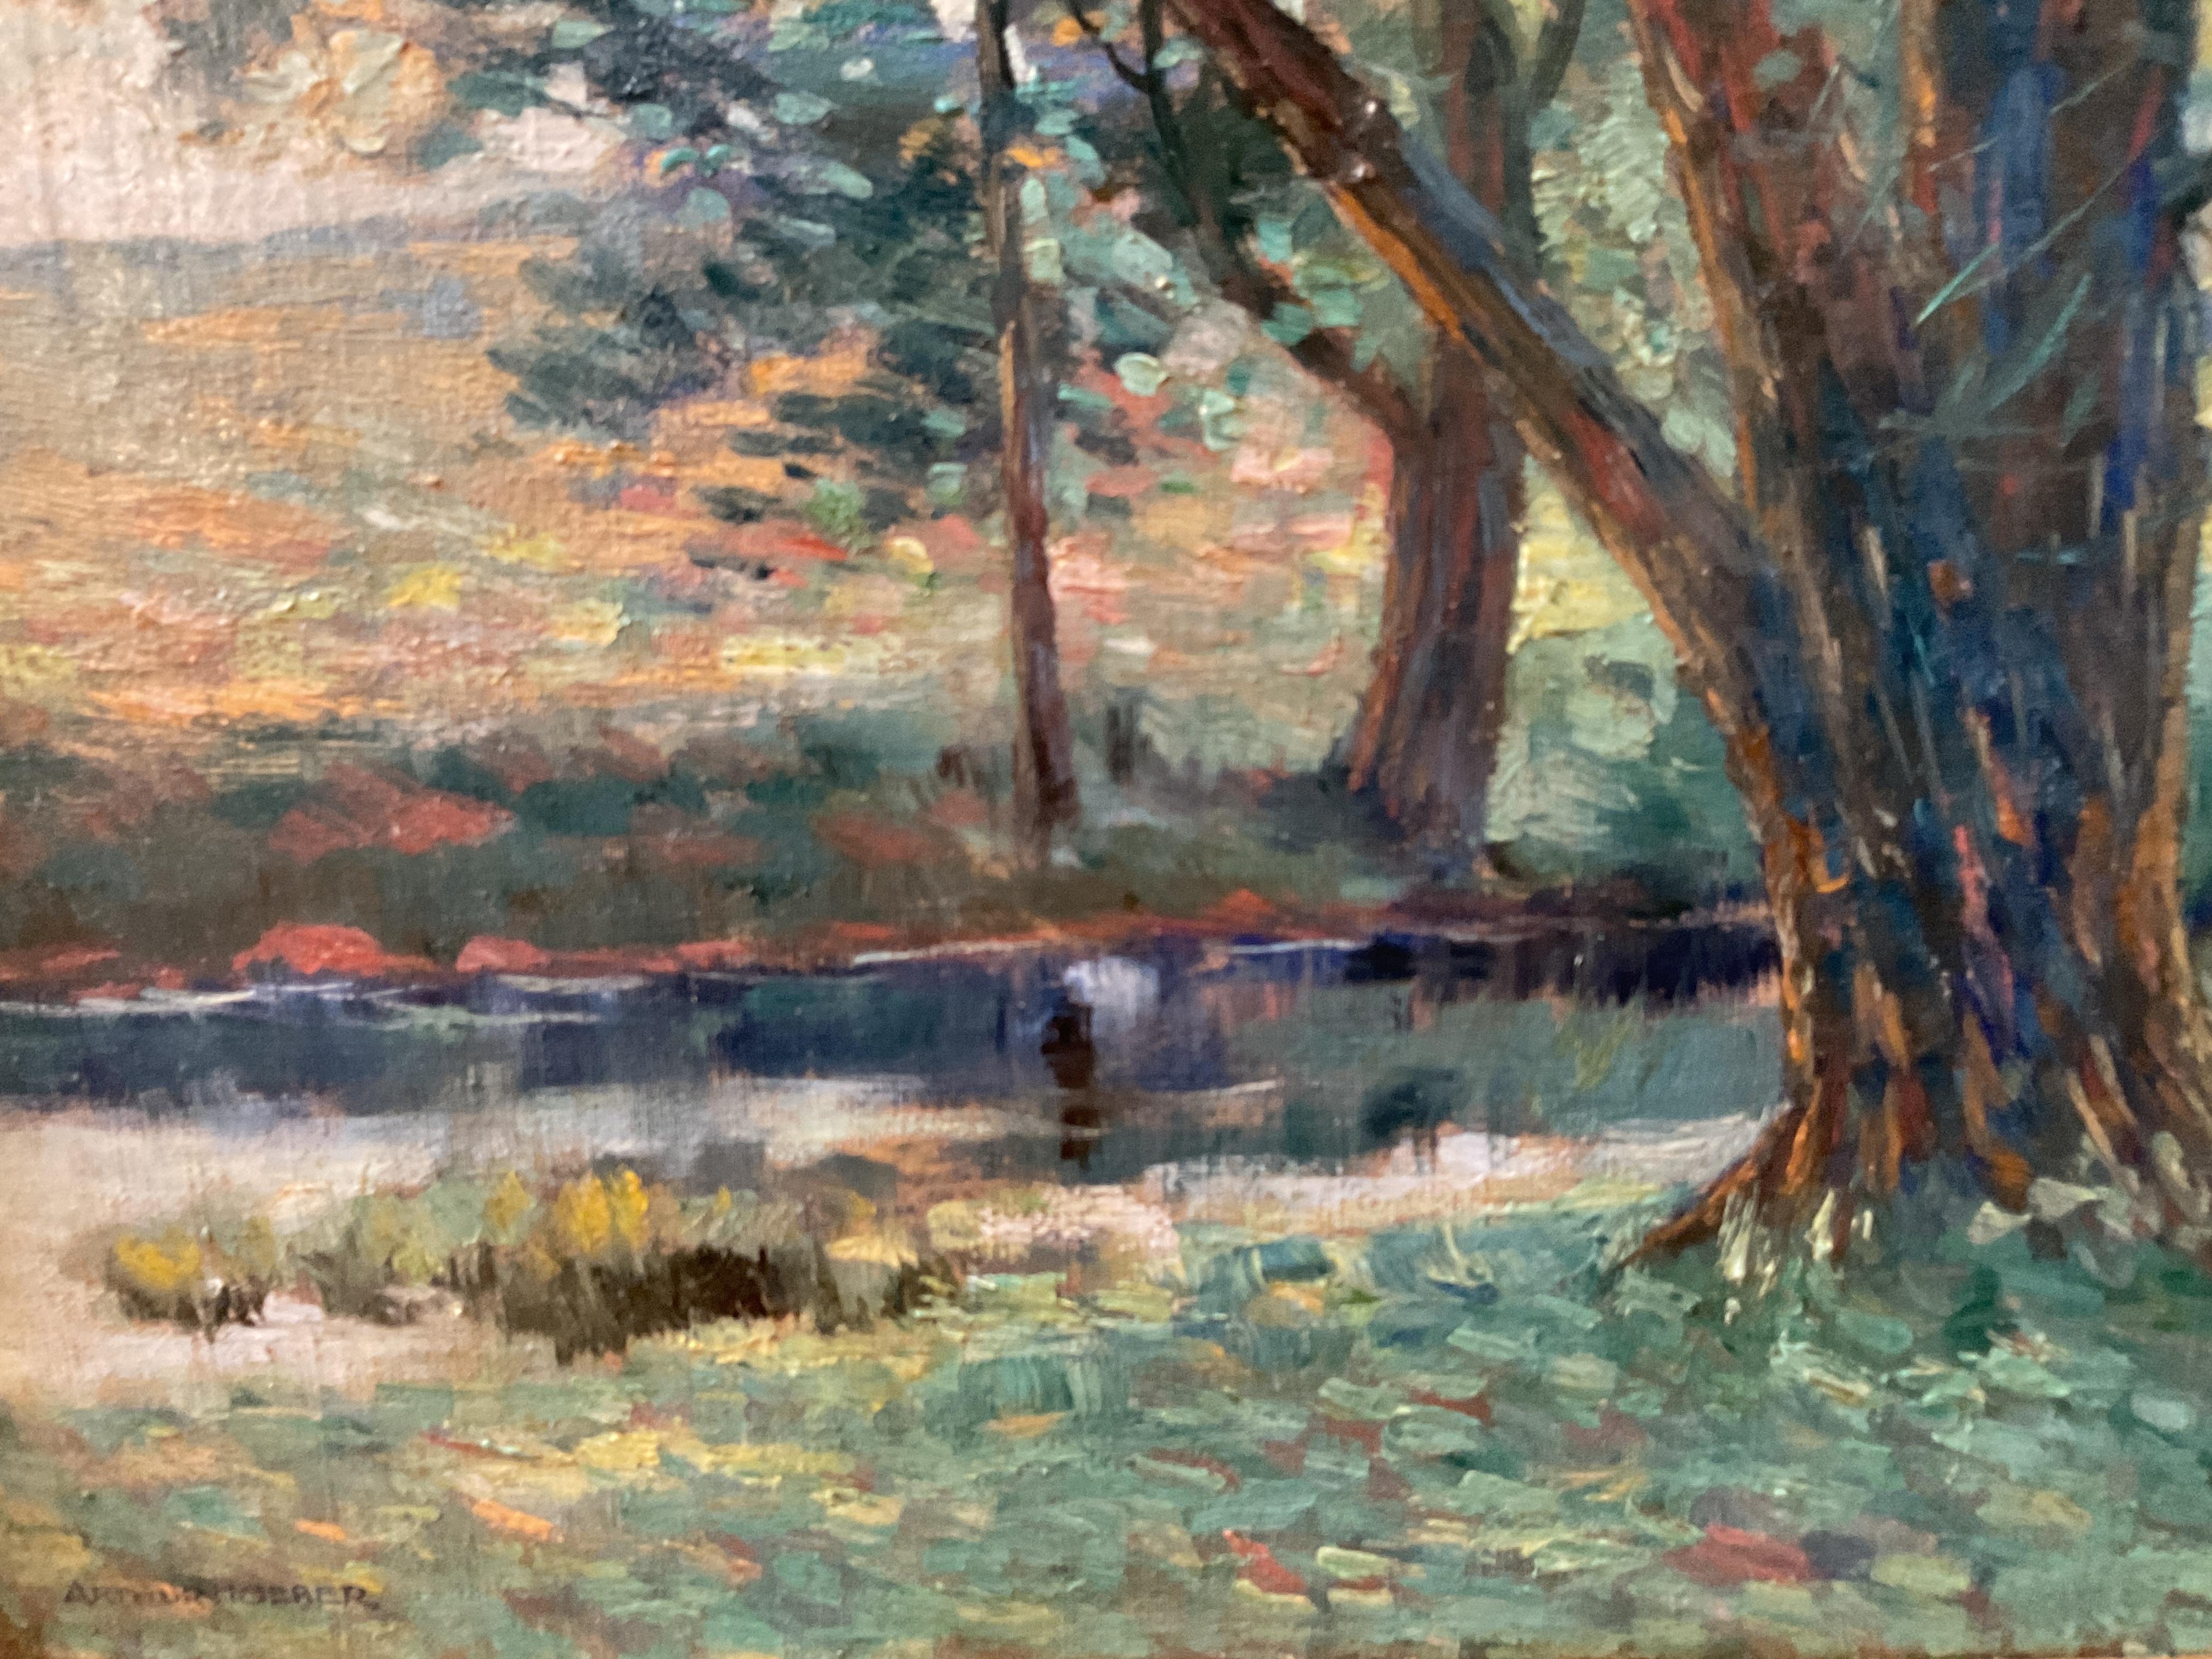 Antique American Impressionist Landscape Painting - “Willow” by Arthur Hoeber For Sale 2